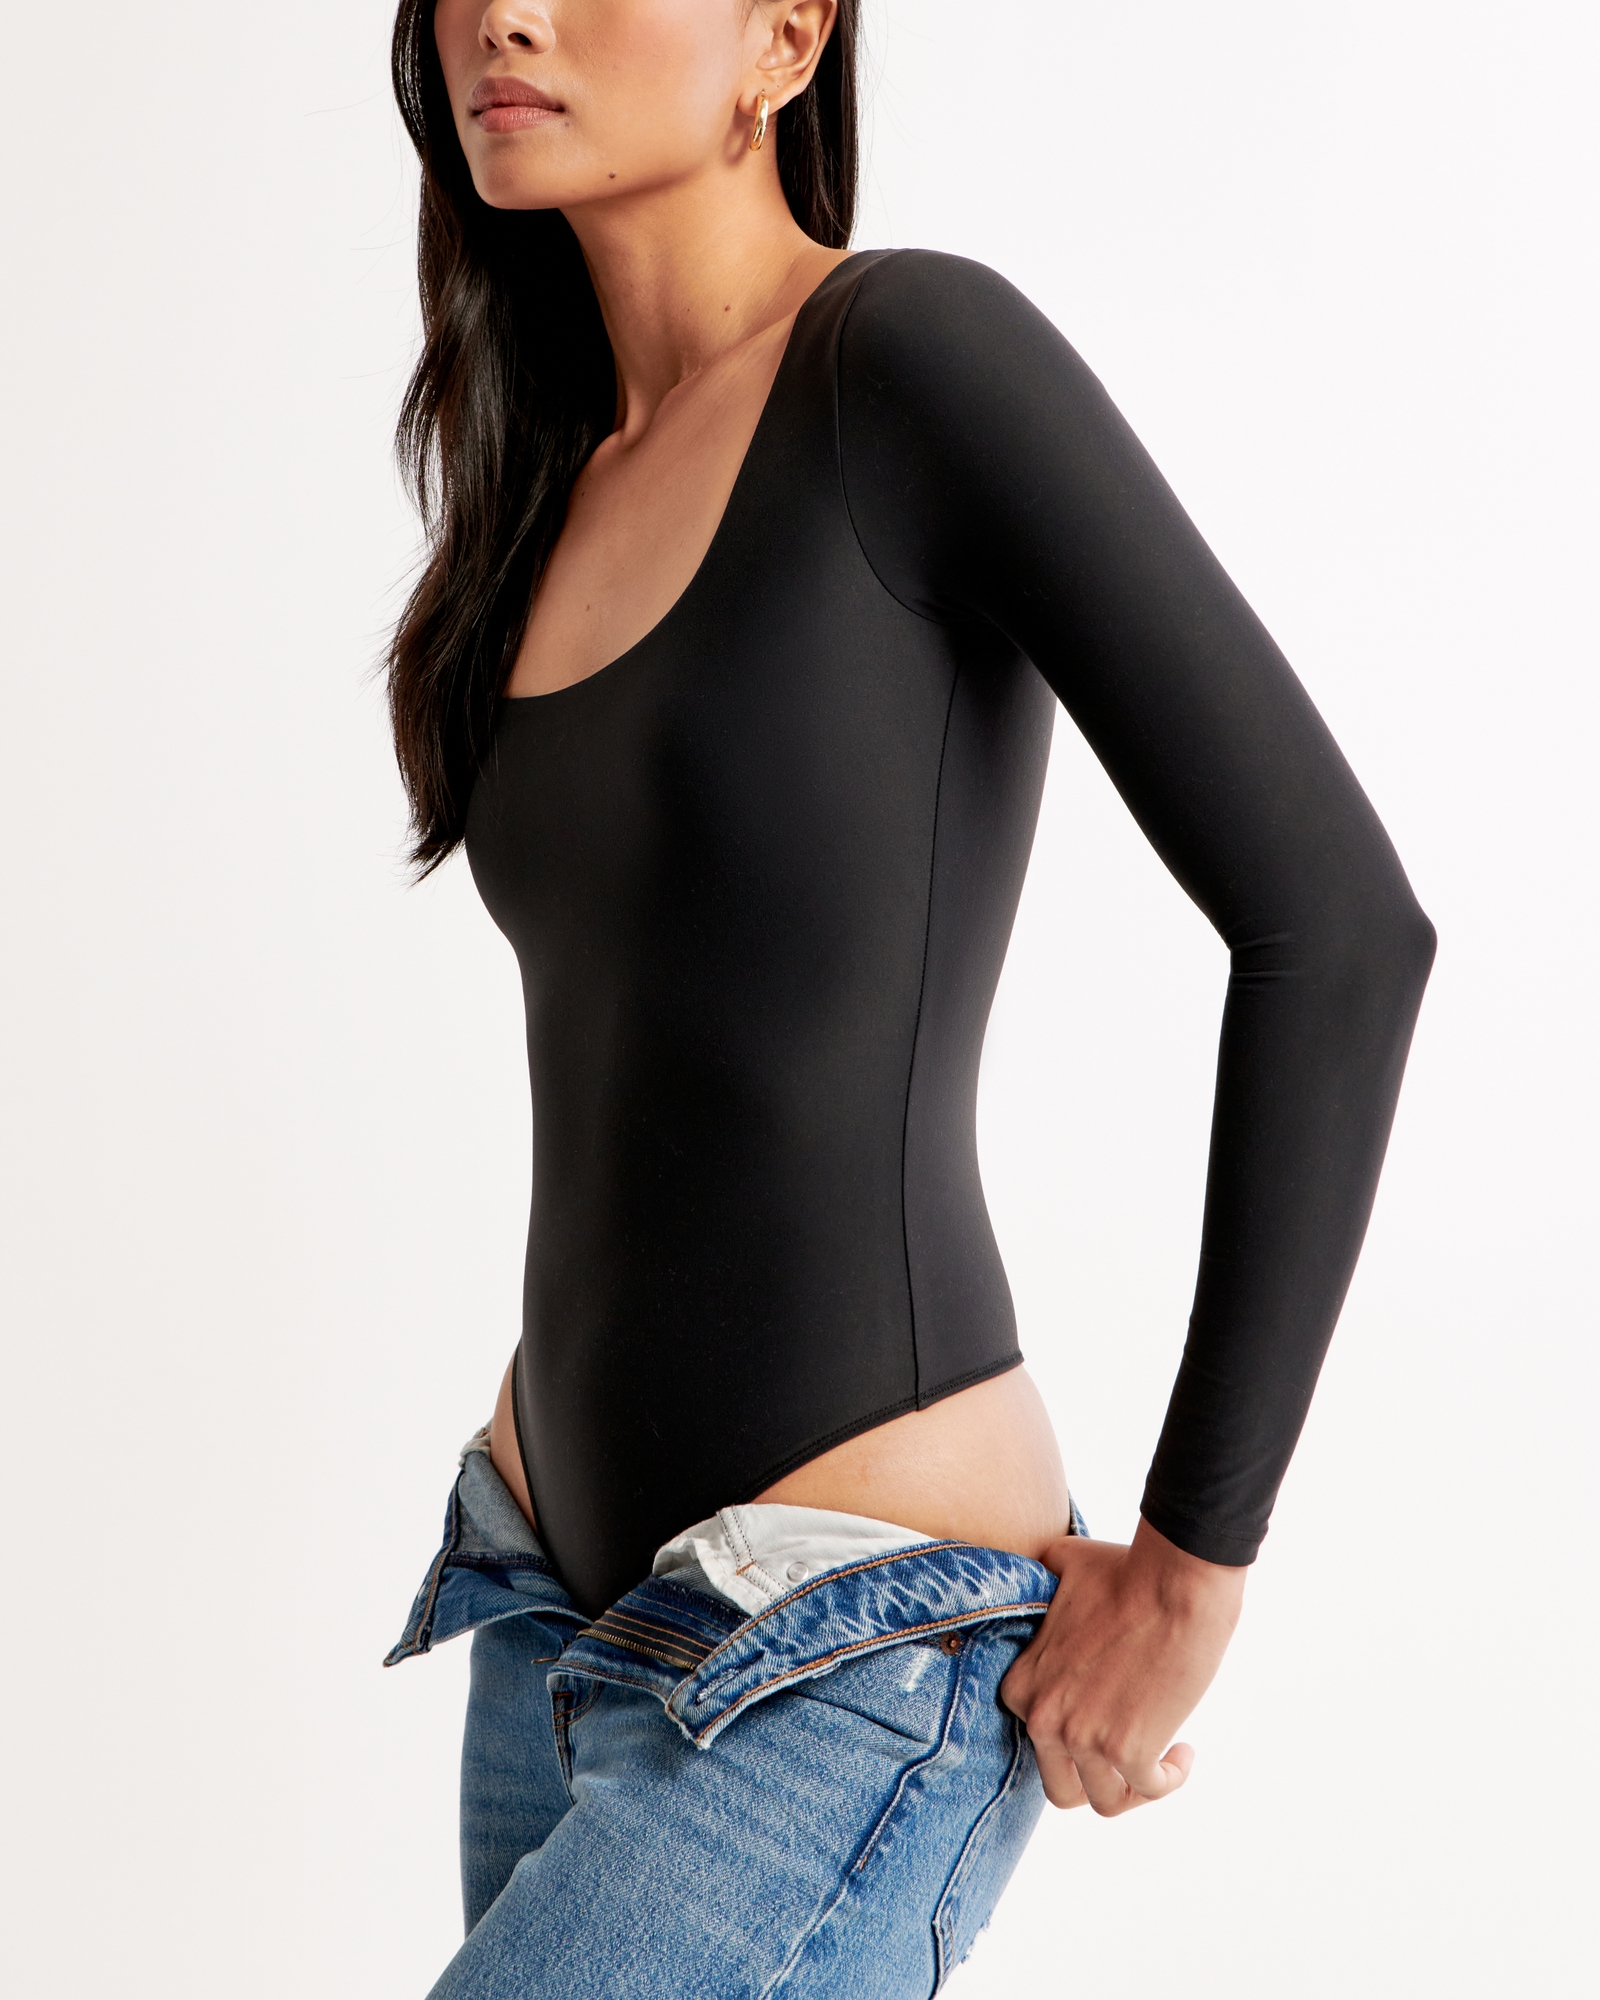 Womens White Squareneck Long Sleeve Bodysuit S, M, L, XL